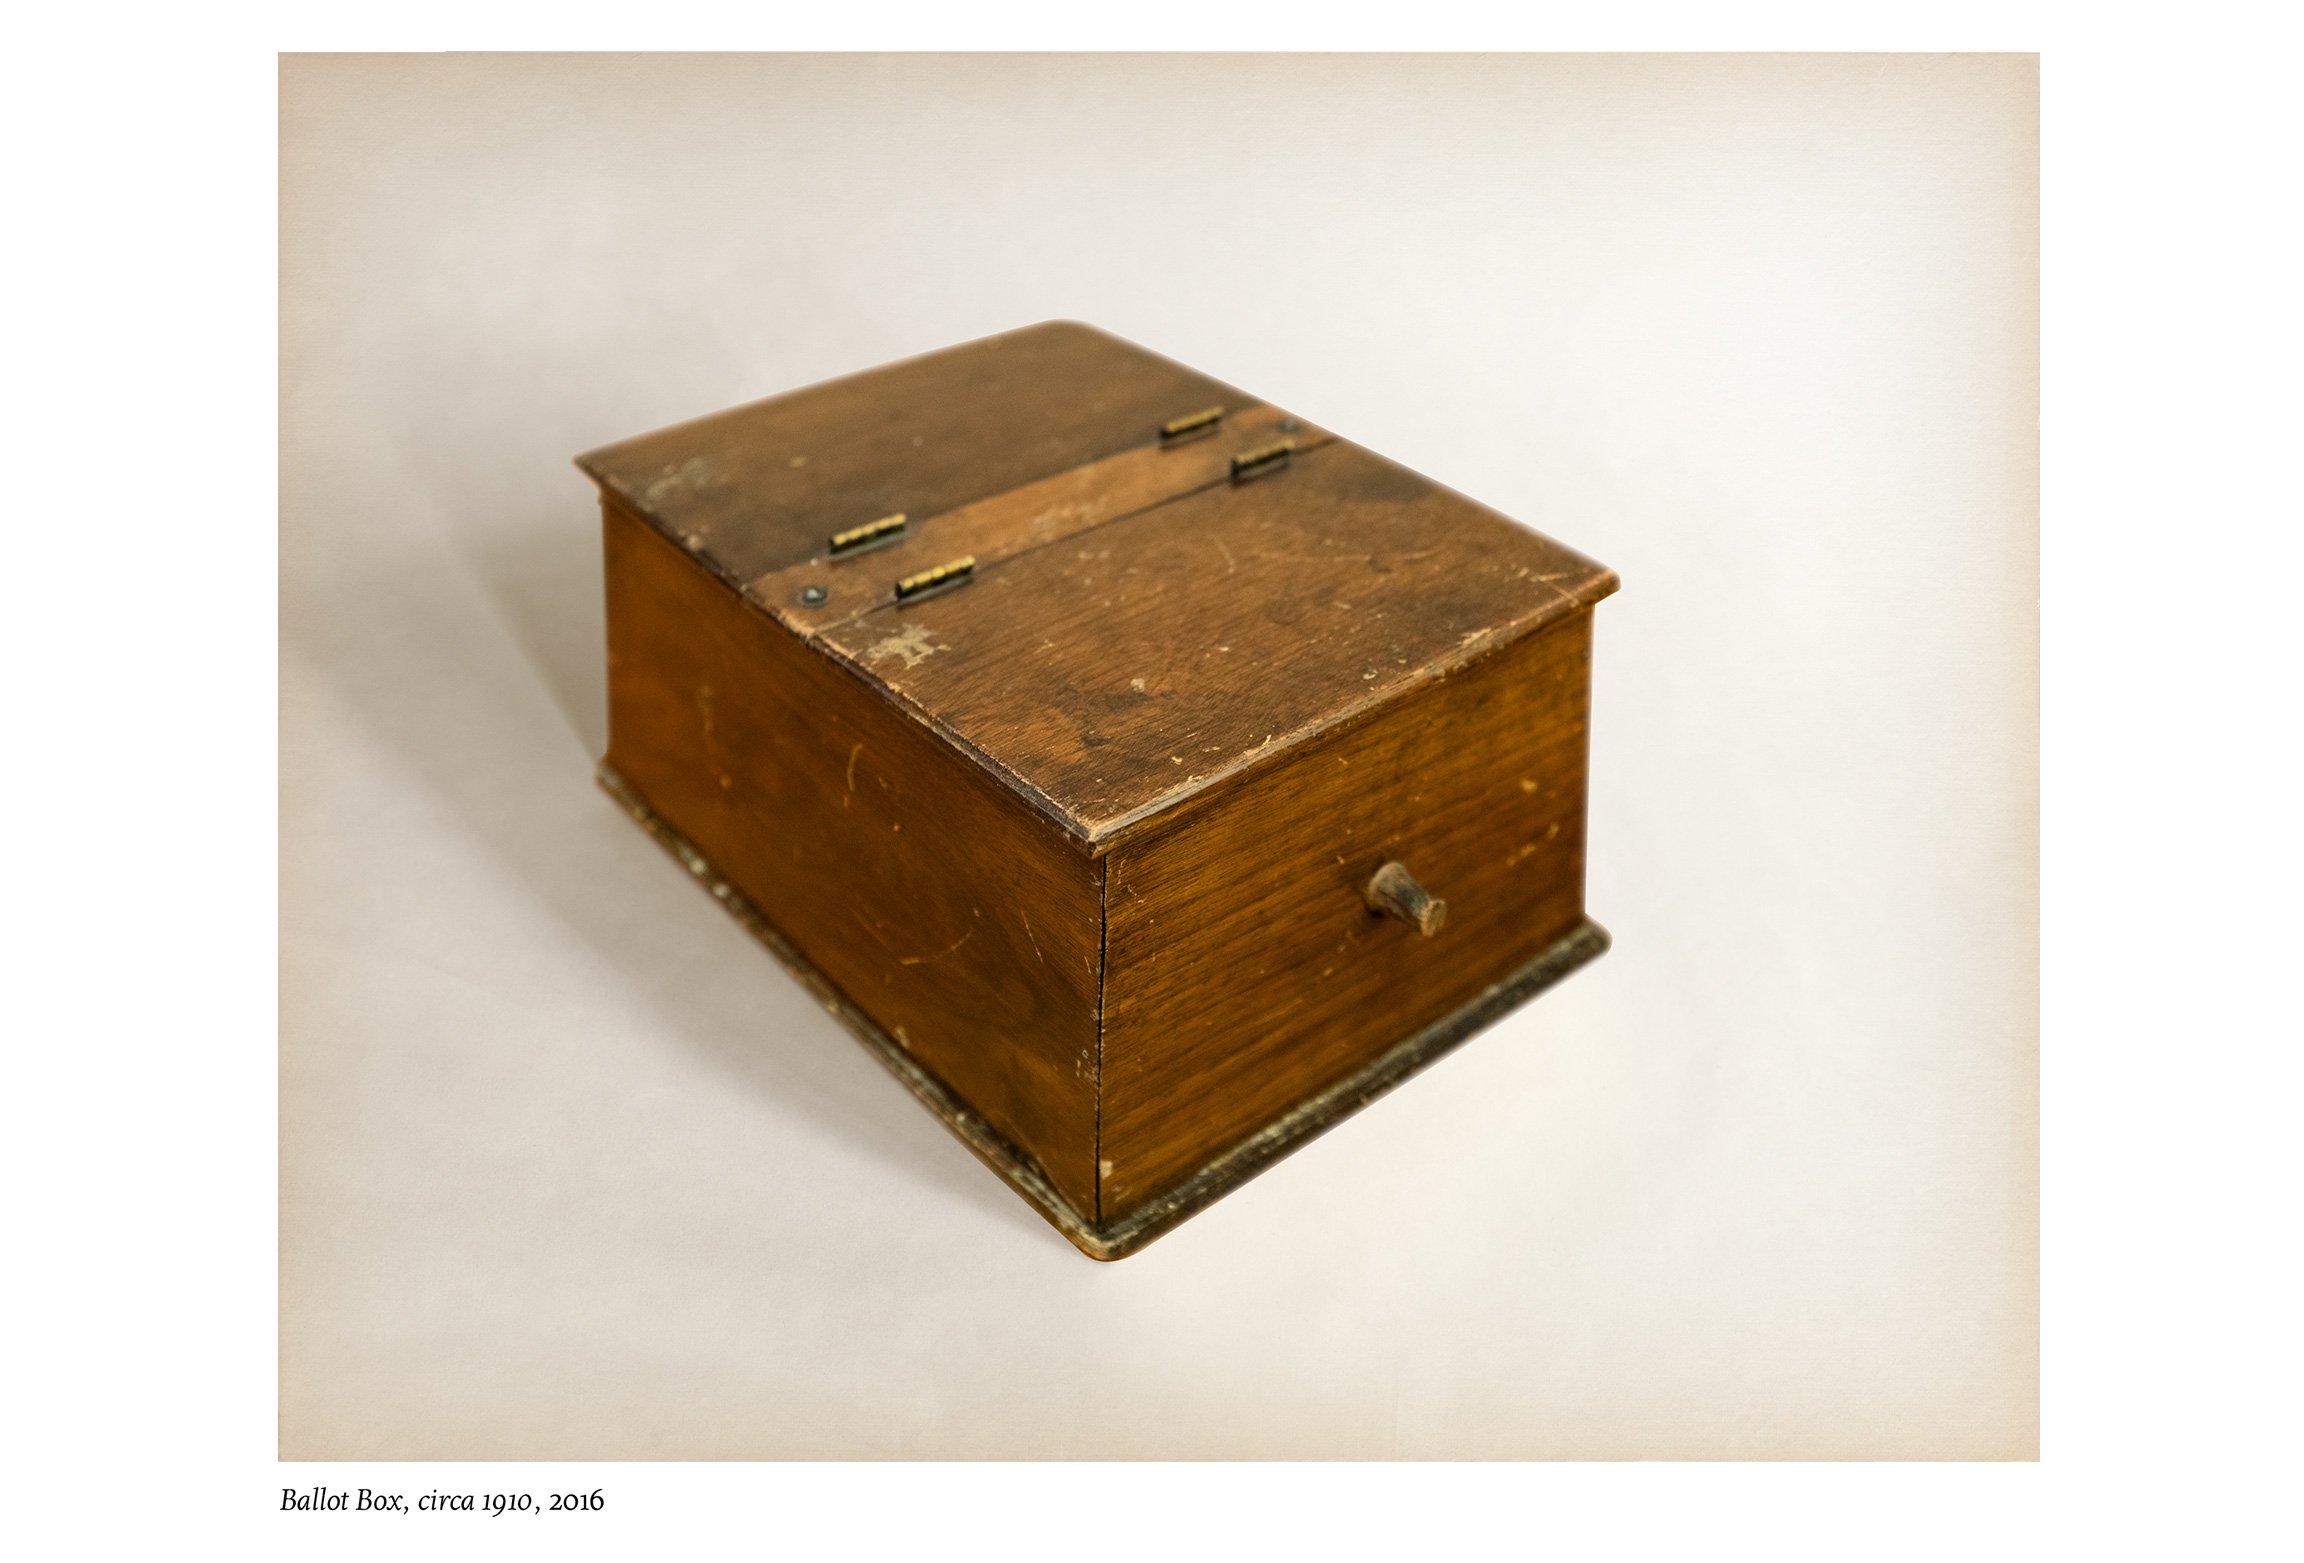 Ballot Box. William H. Smith Memorial Library, Indiana Historica